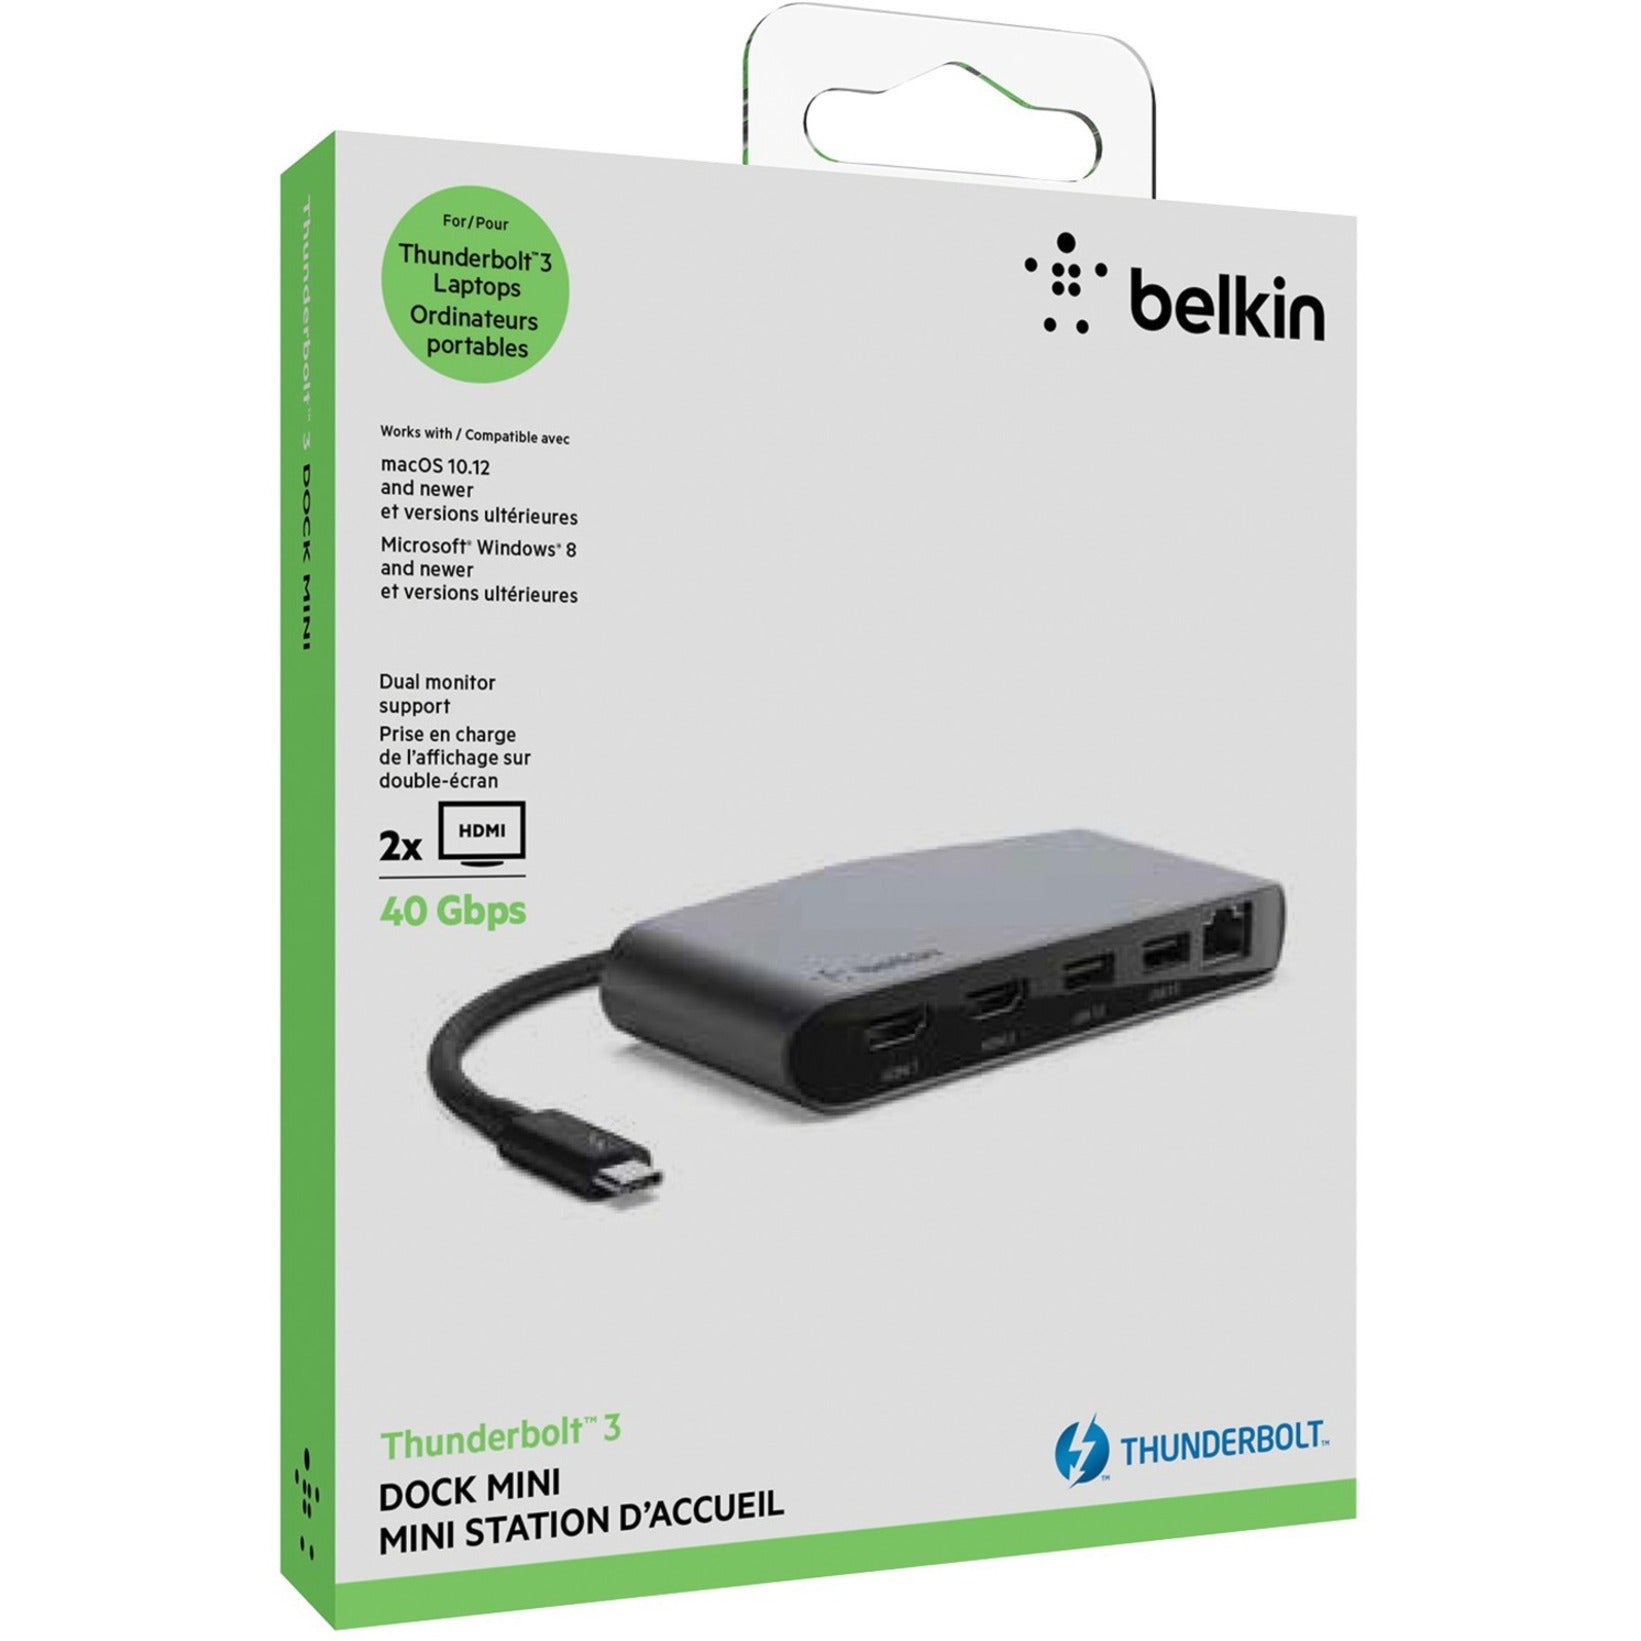 Belkin F4U098BT Thunderbolt 3 Dock Mini HD, Dual 4k Display @60Hz, MacOS and Windows Compatible